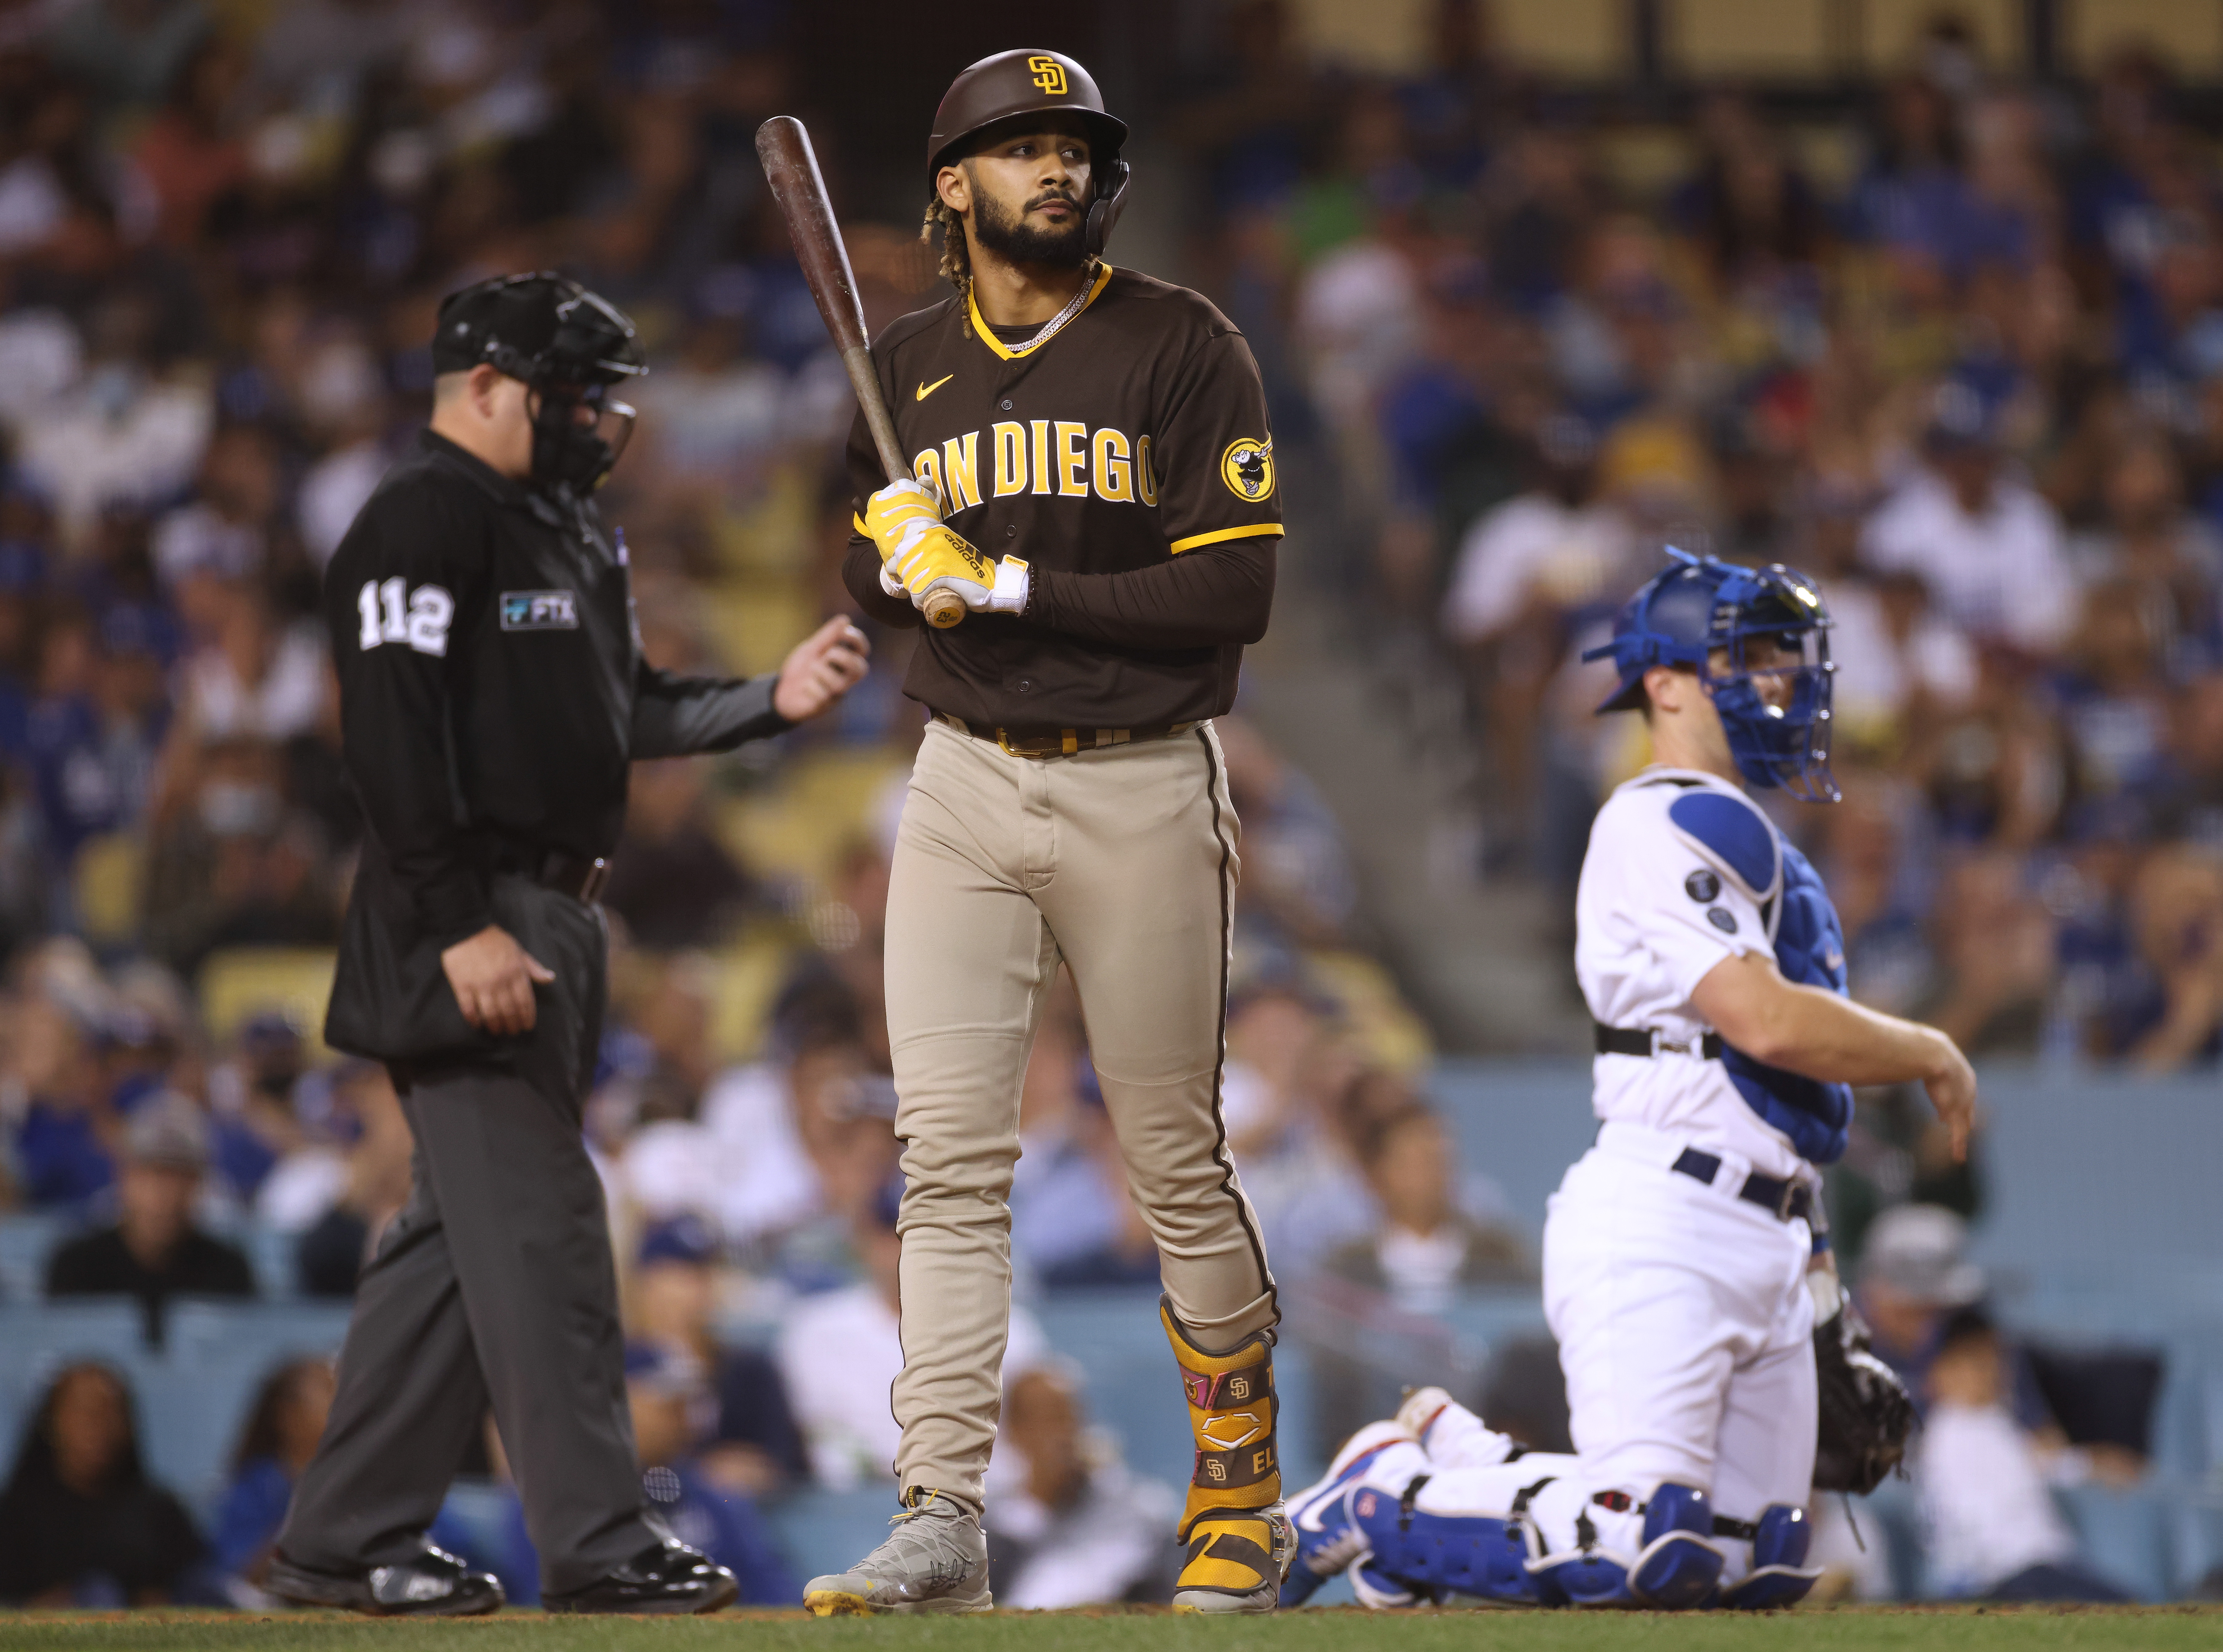 Where's the needle?': Yankees fans rip Padres' Fernando Tatis Jr